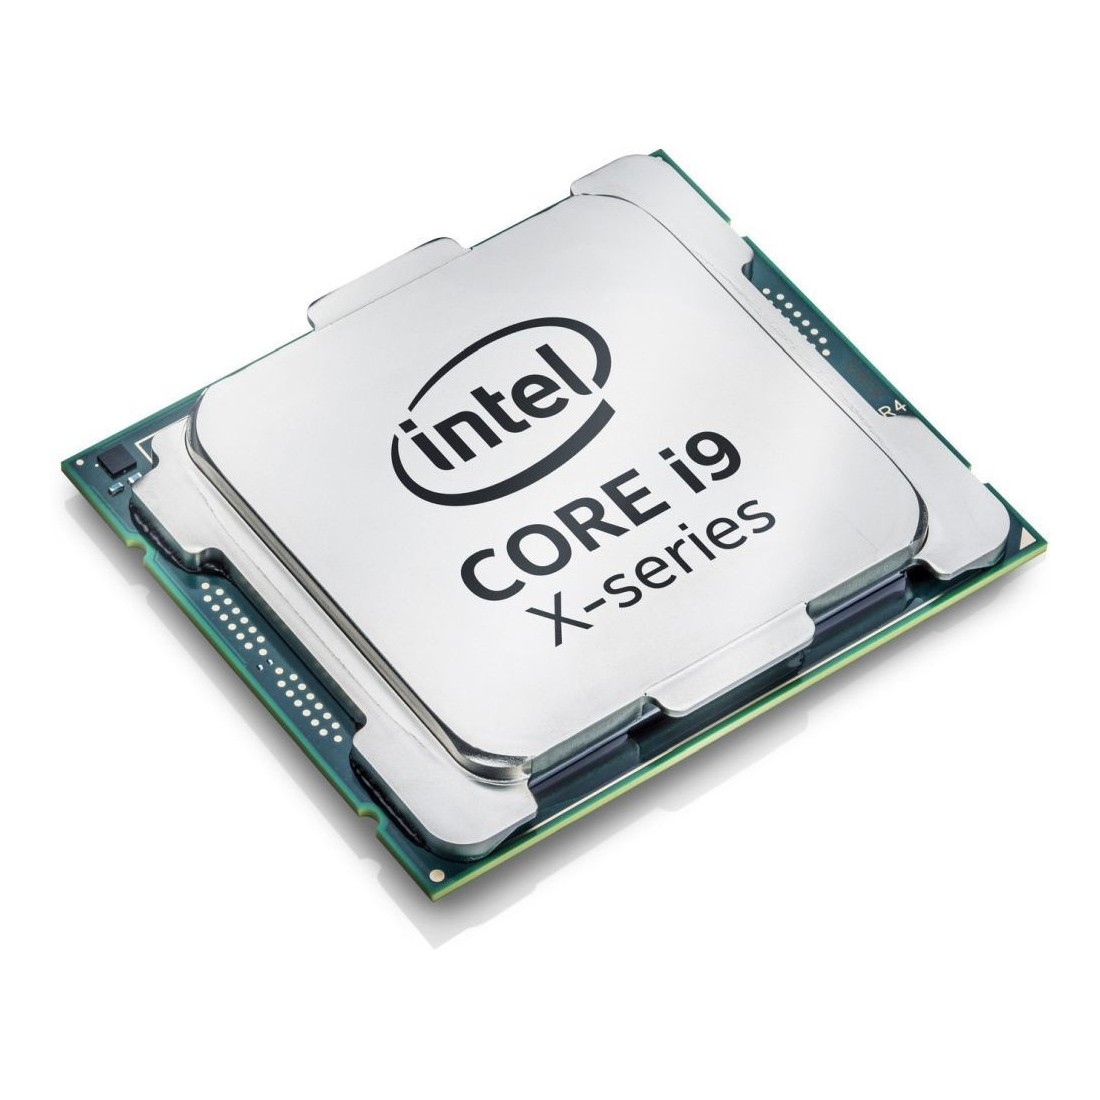 Intel Core i9-7900X Skylake-X 10-Core 3.3 GHz LGA 2066 Desktop Processor - BX80673I97900X - image 2 of 3